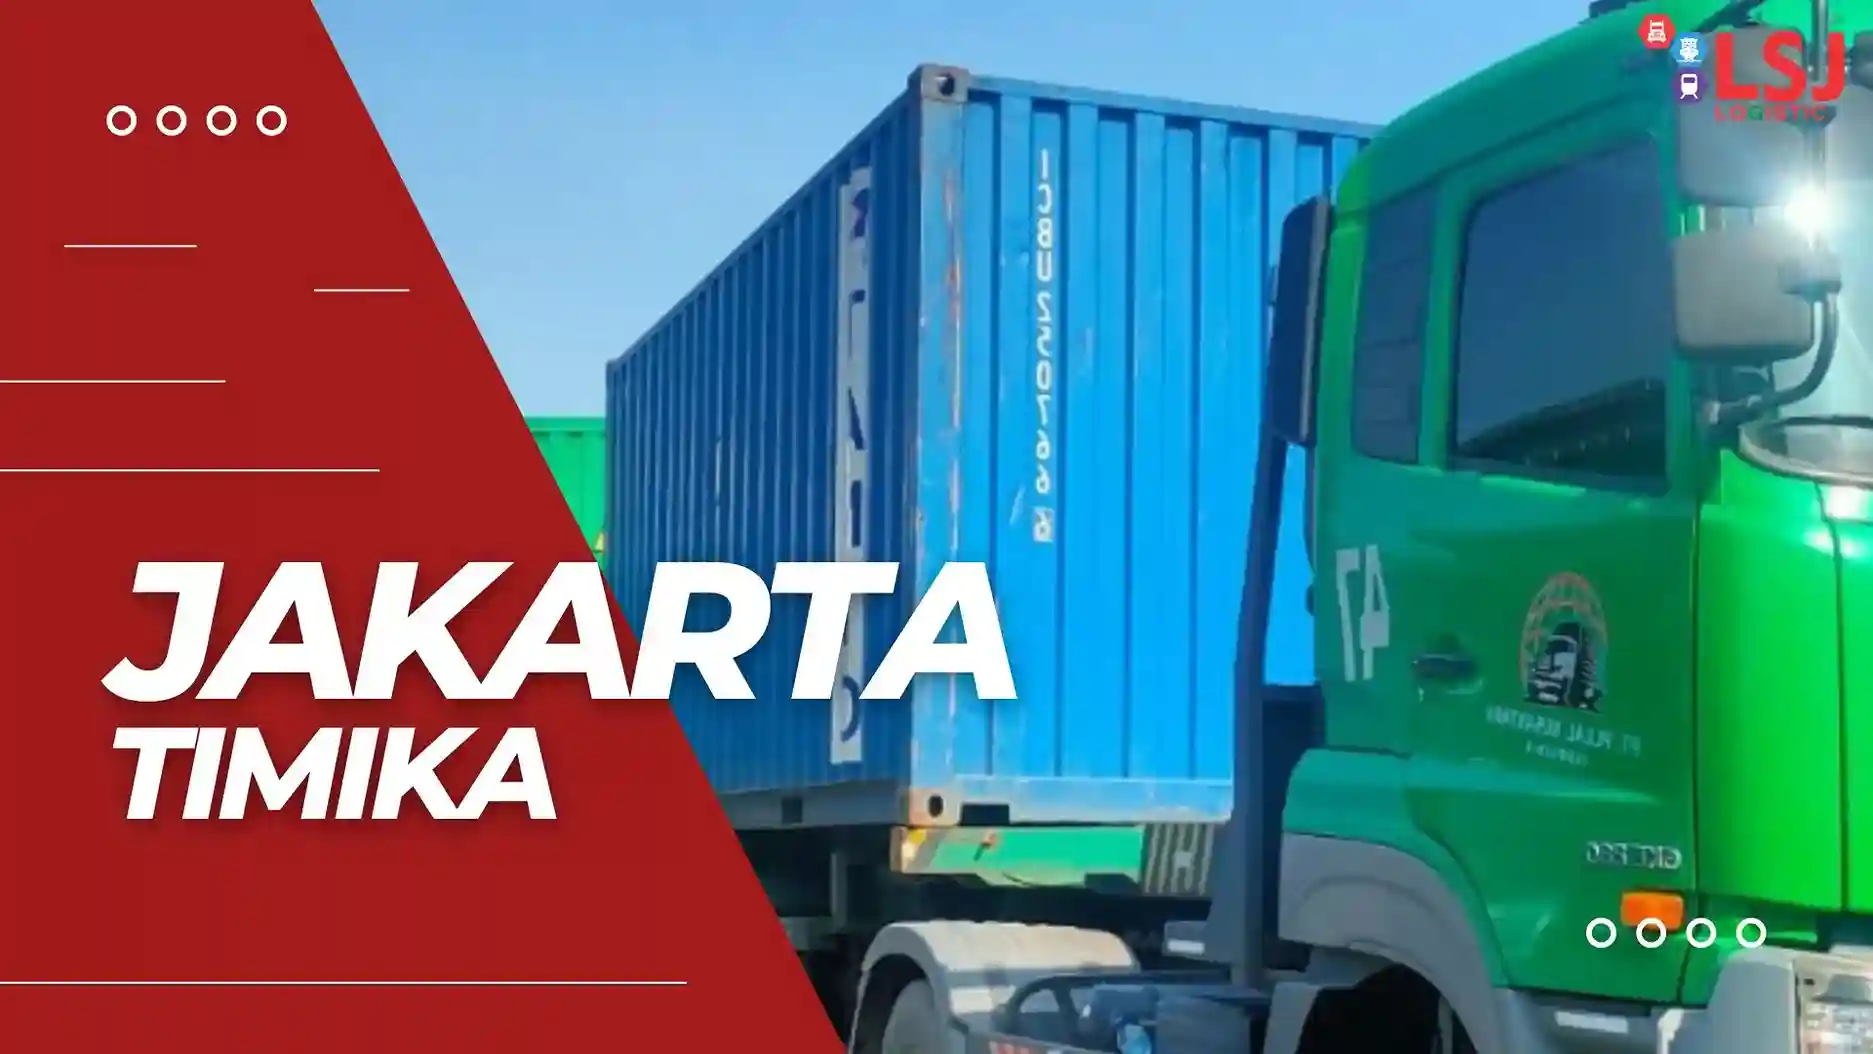 Harga Pengiriman Container Jakarta Timika